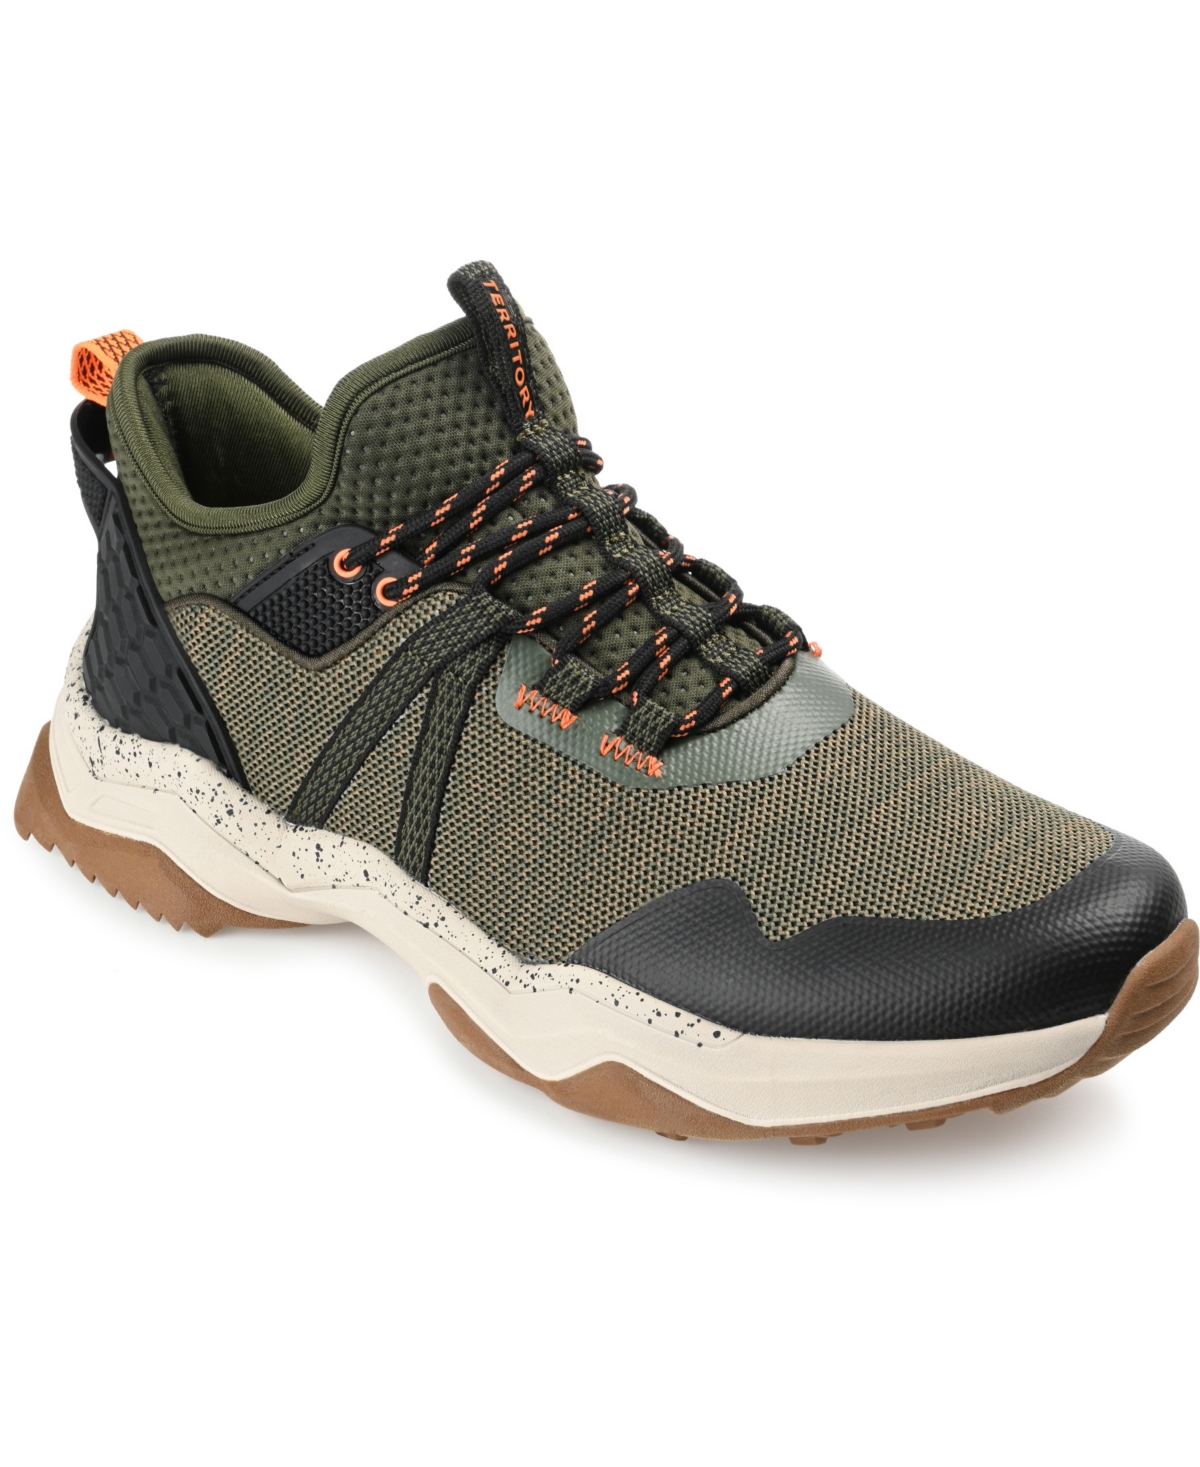 Men's Sidewinder Water-resistant Knit Trail Sneakers - Green